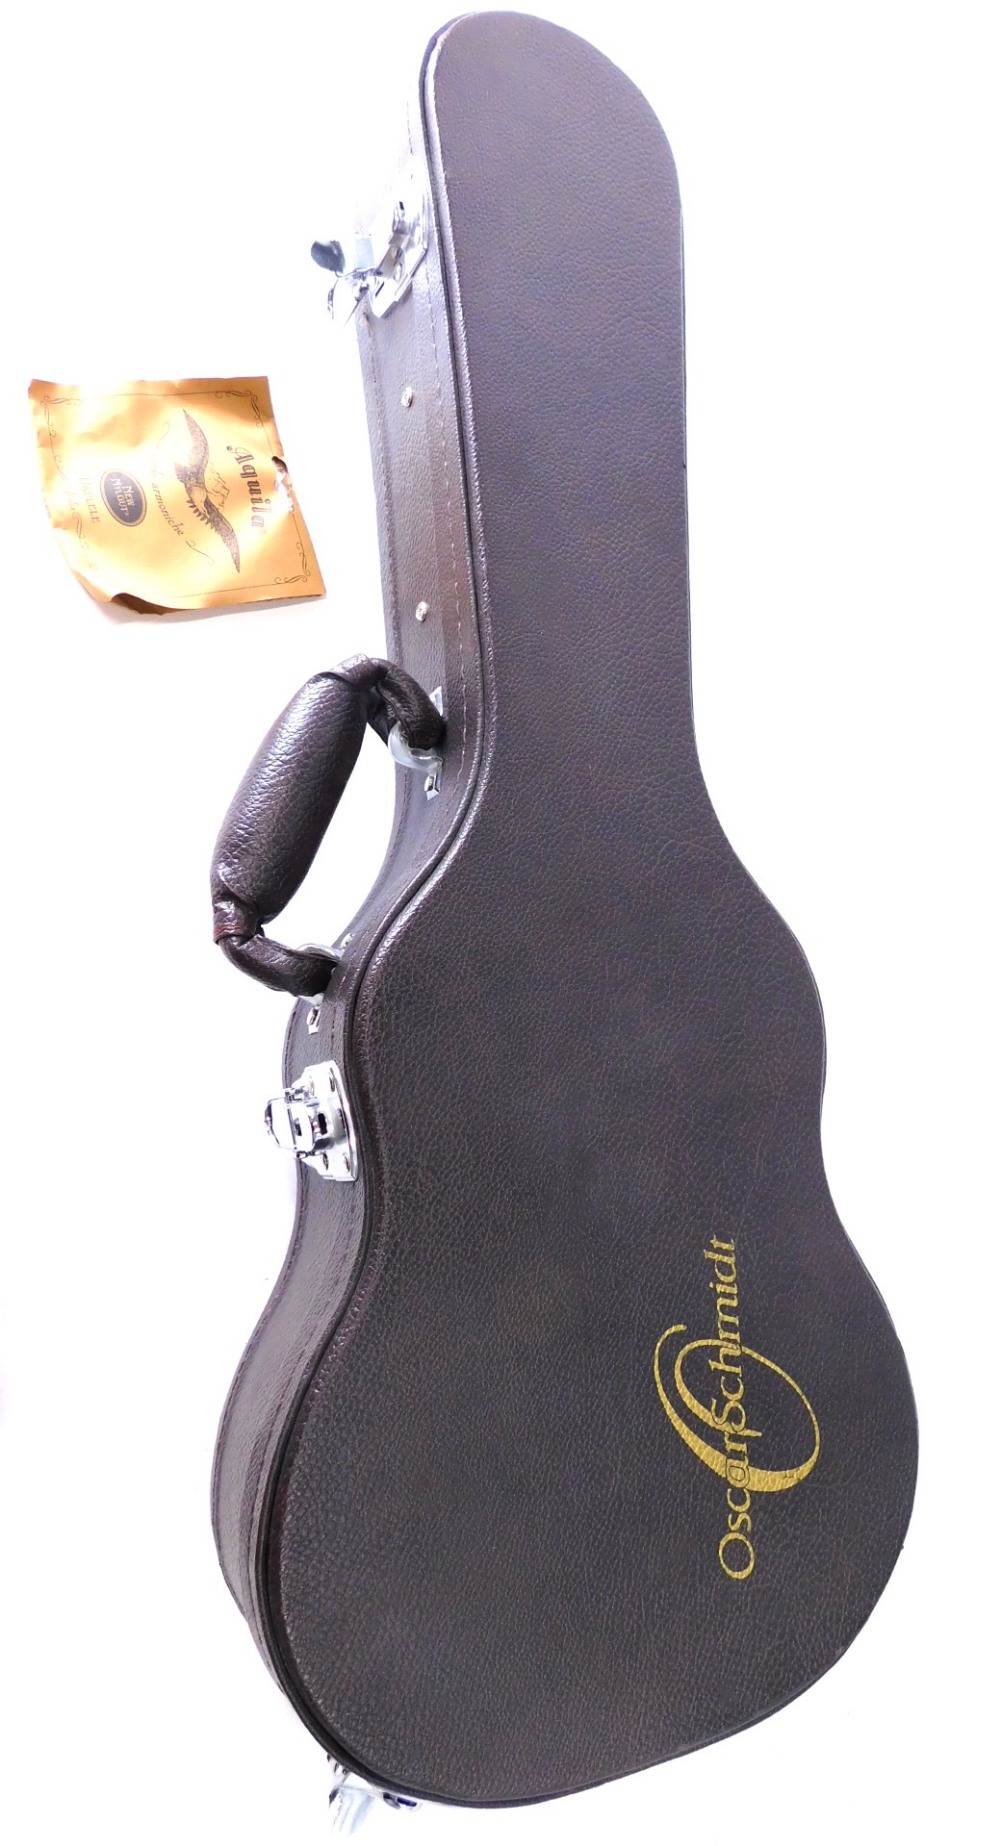 An Oscar Schmidt Washburn Hawaiian style guitar. (cased) - Image 7 of 7